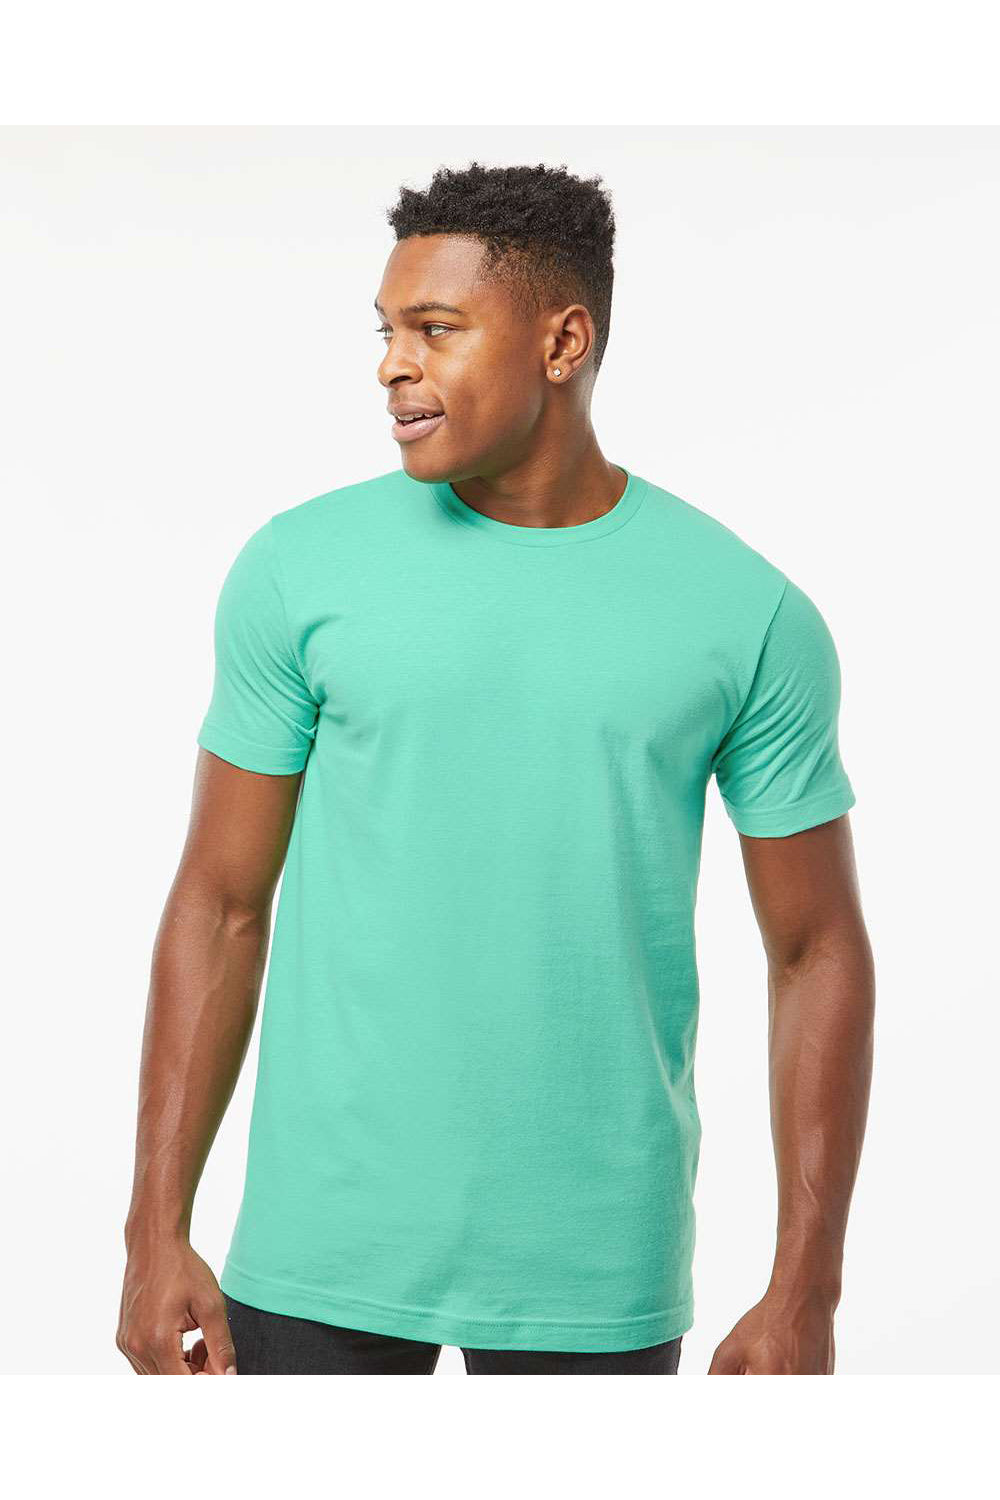 Tultex 202 Mens Fine Jersey Short Sleeve Crewneck T-Shirt Mint Green Model Front